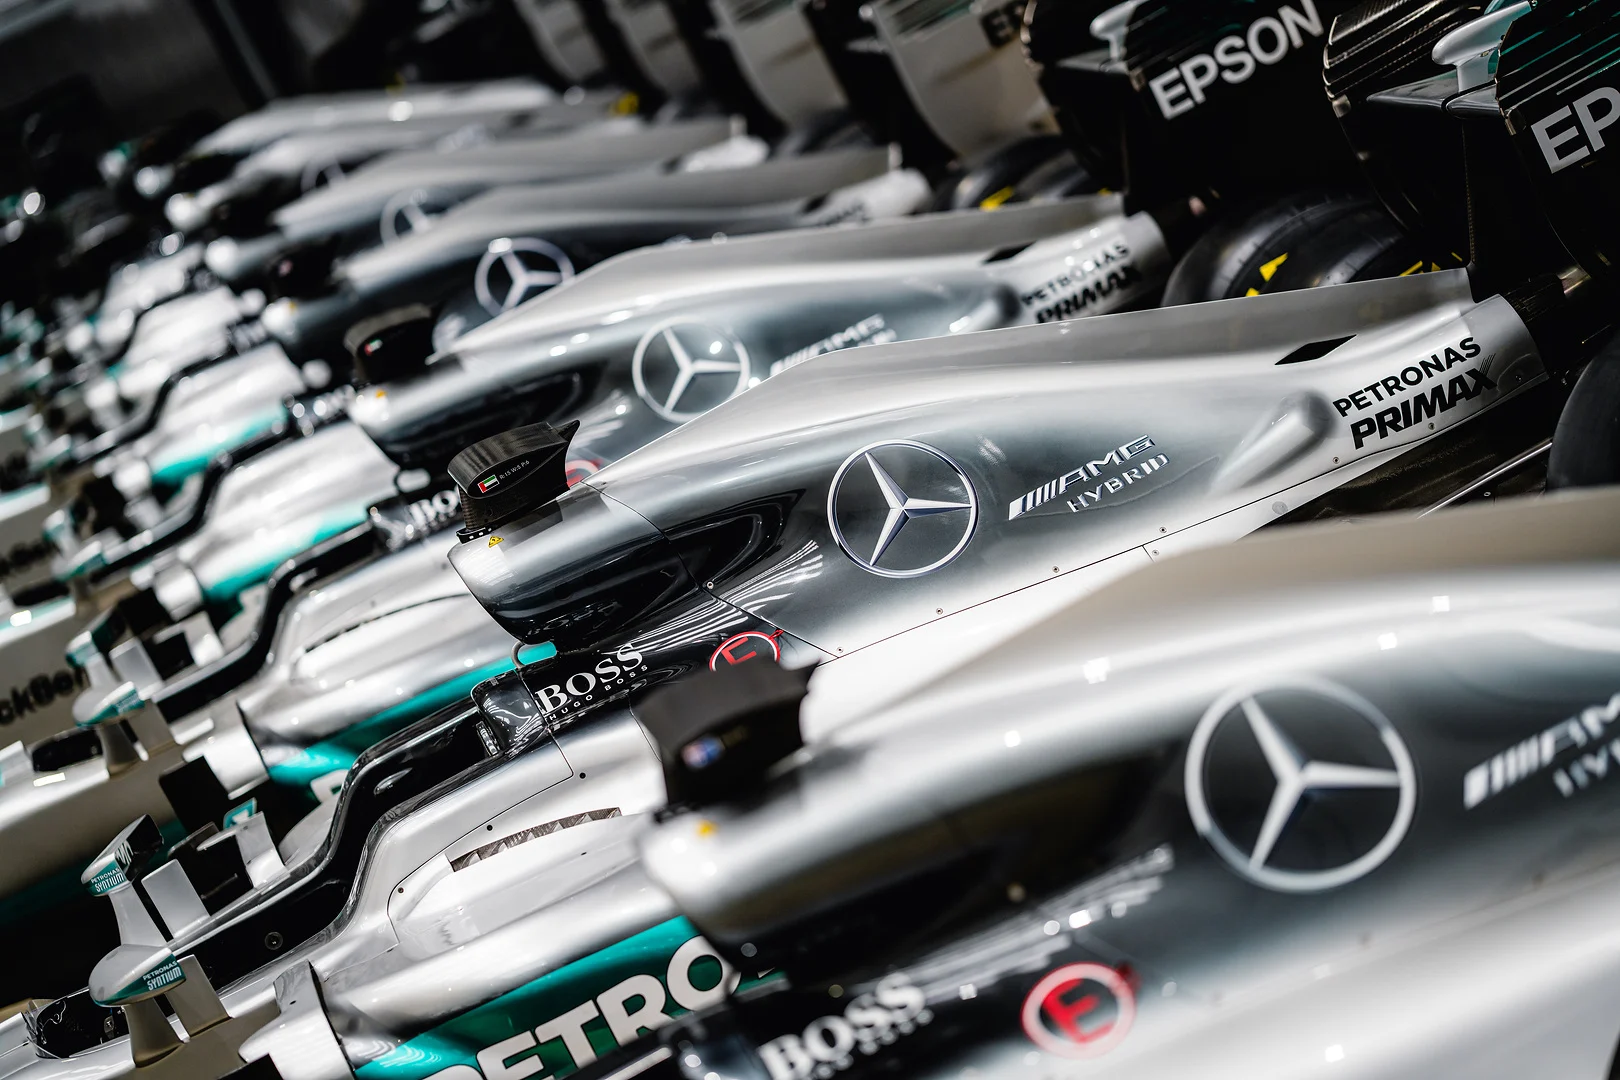 Porte clé Mercedes-AMG Petronas Motorsport Team F1 Driver Officiel